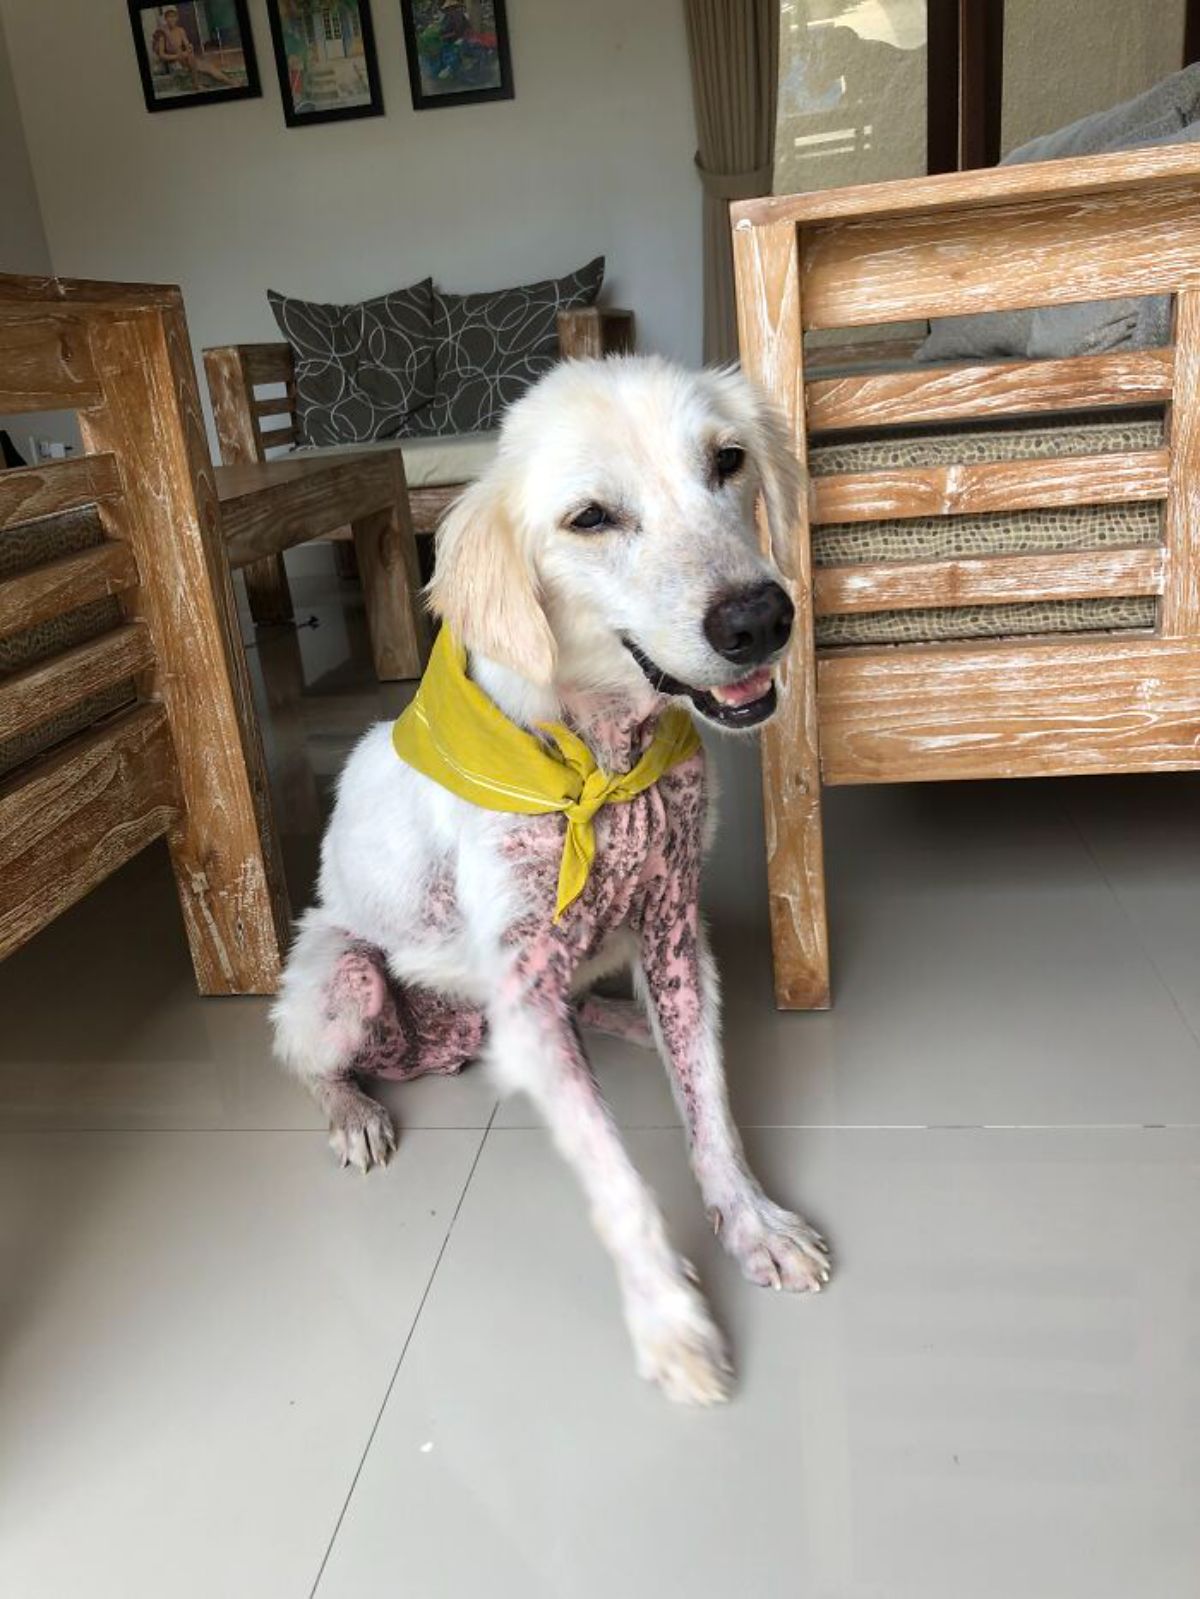 thin and mostly fur-less white dog wearing a yellow bandana